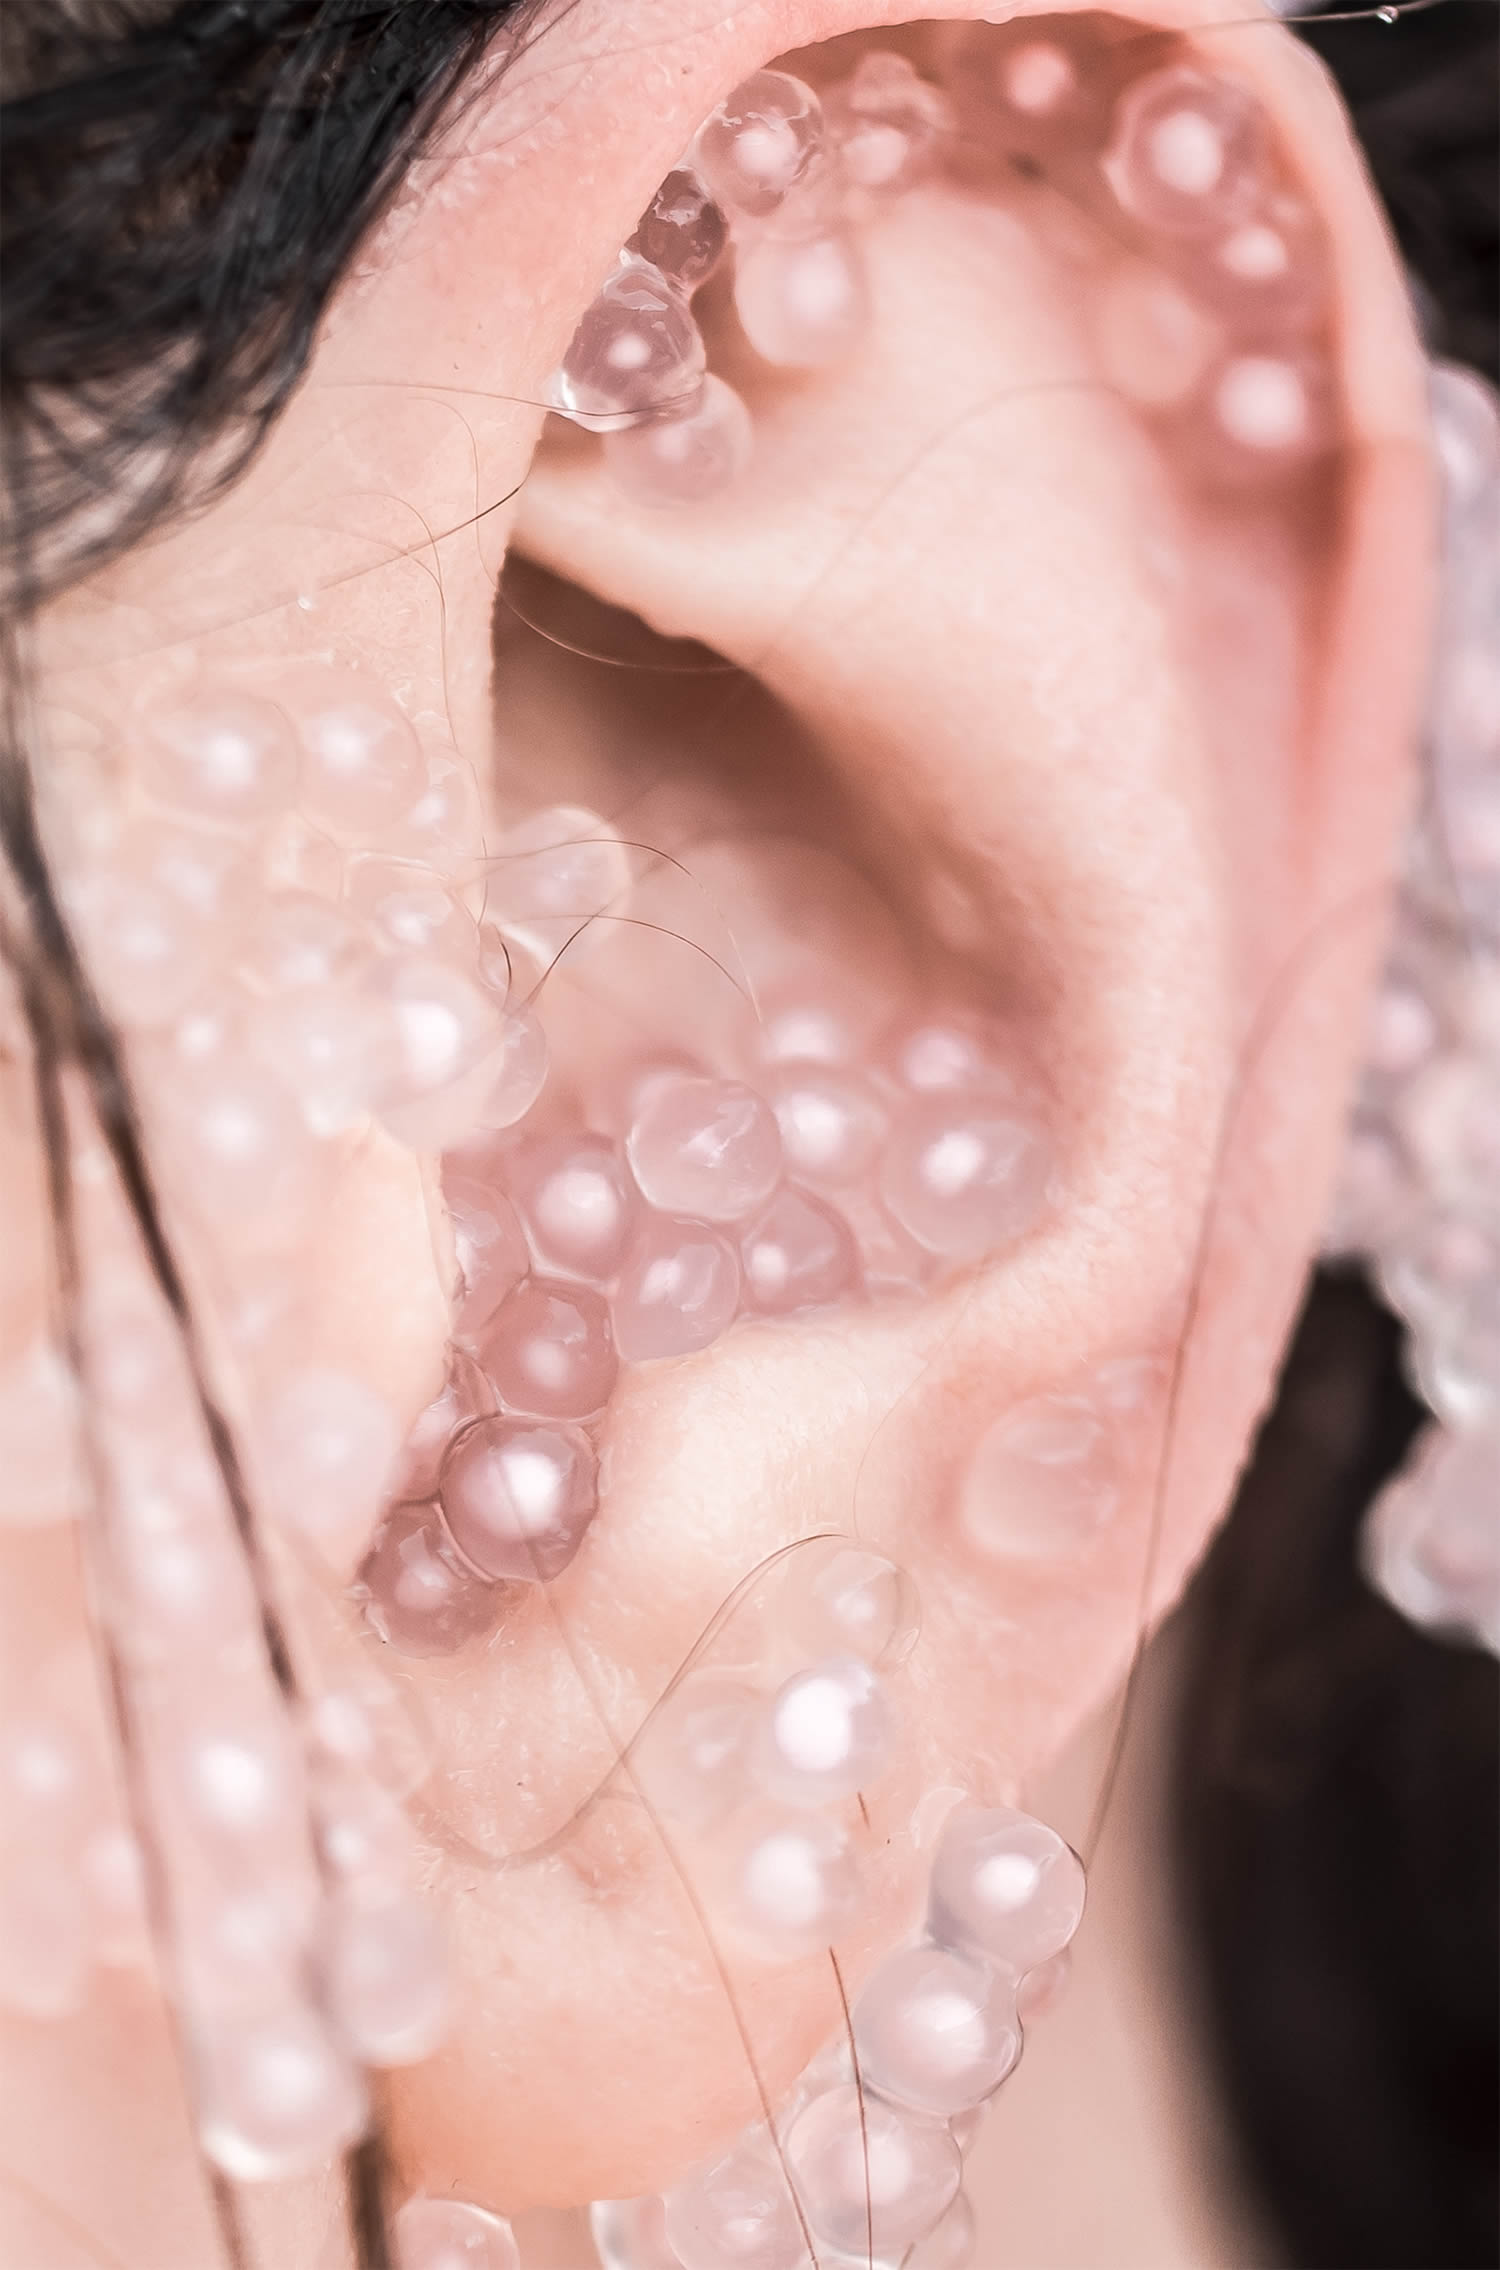 gel beads in ear, flush photo series